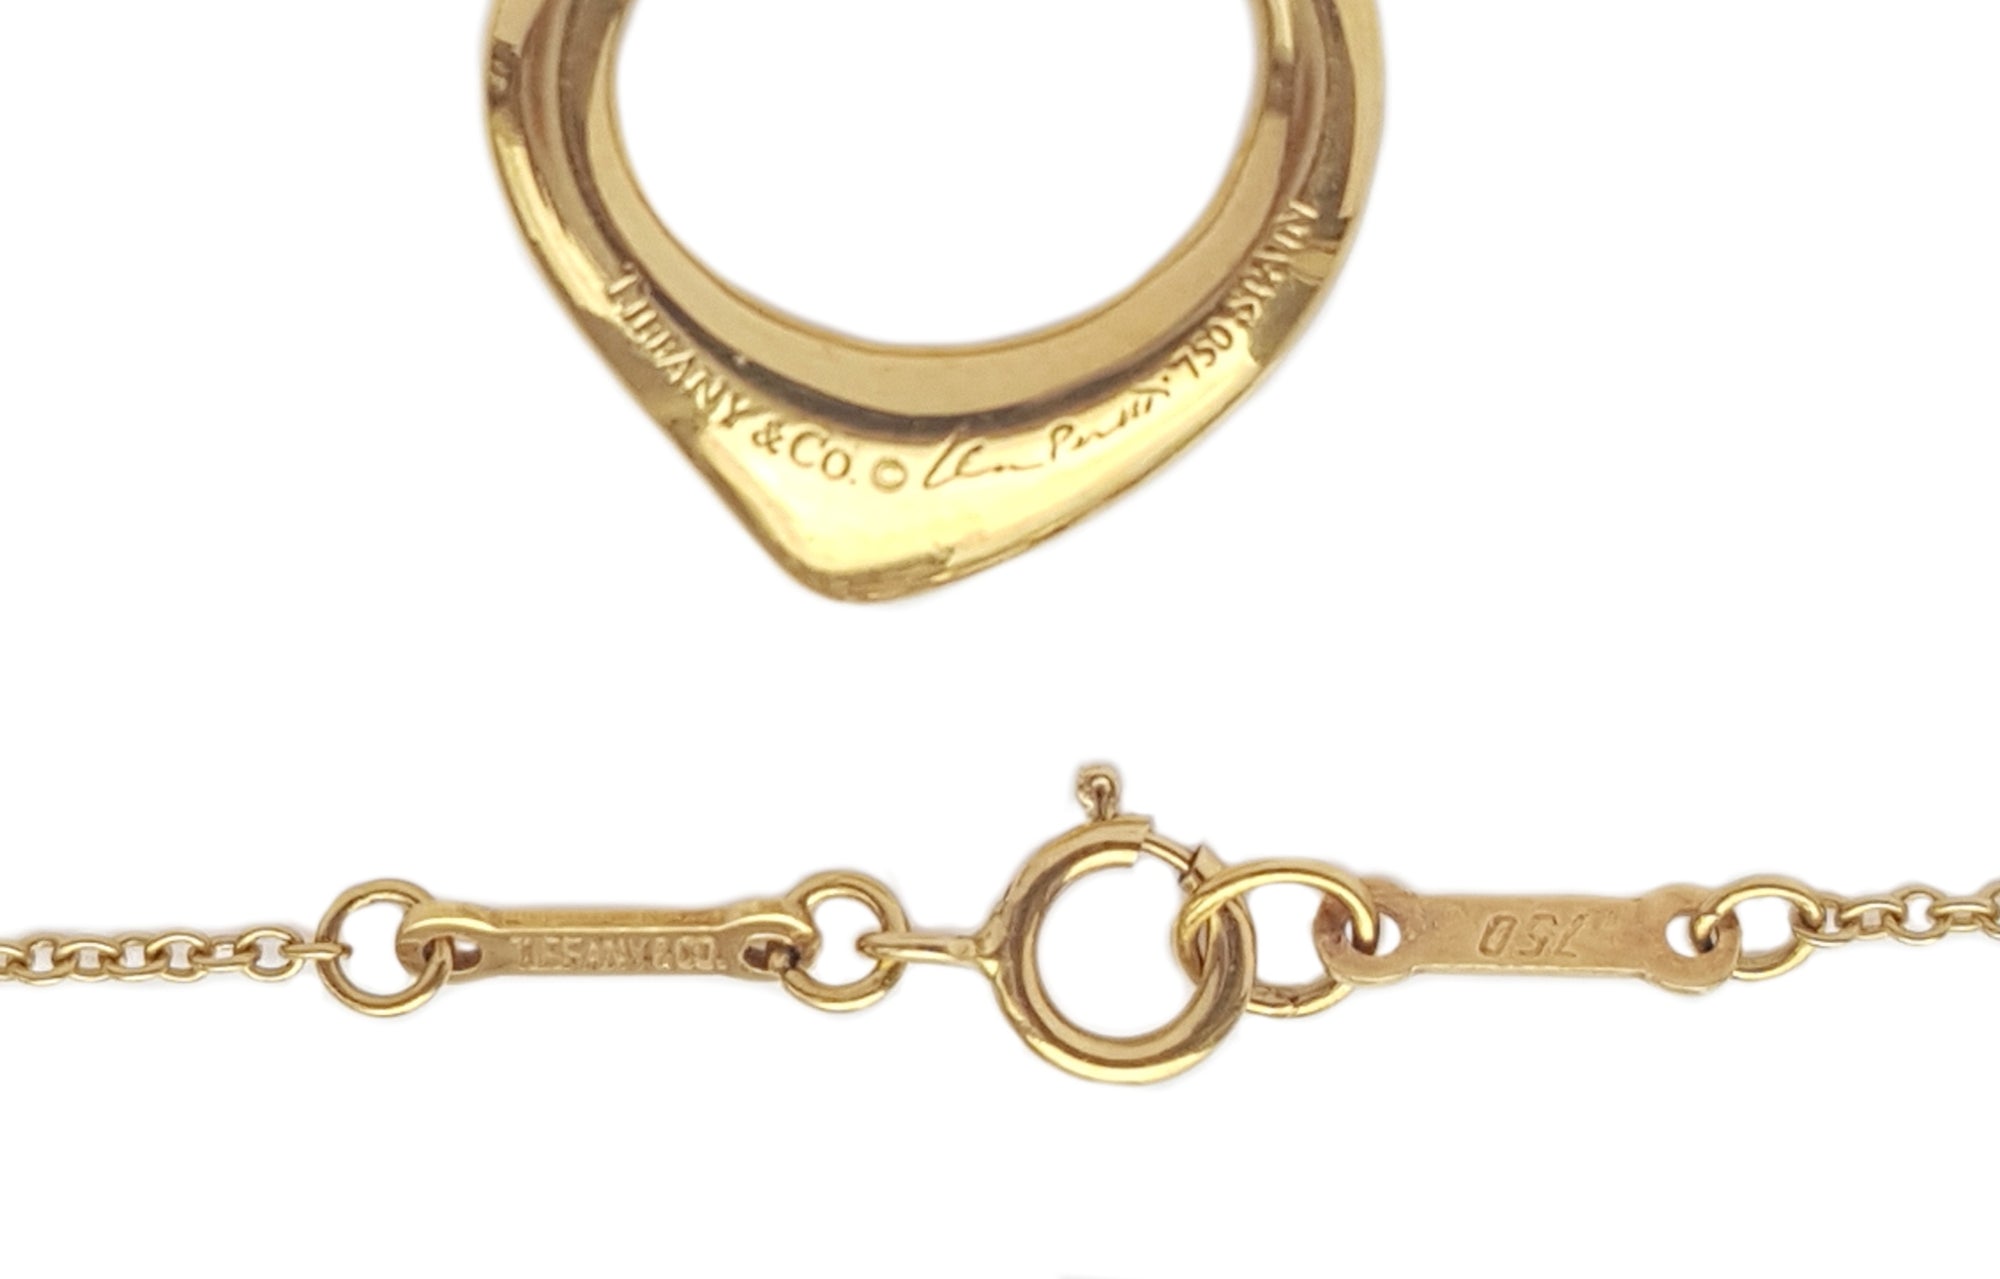 Tiffany & Co Elsa Peretti 750 (Gold) 16mm Open Heart Necklace £1150